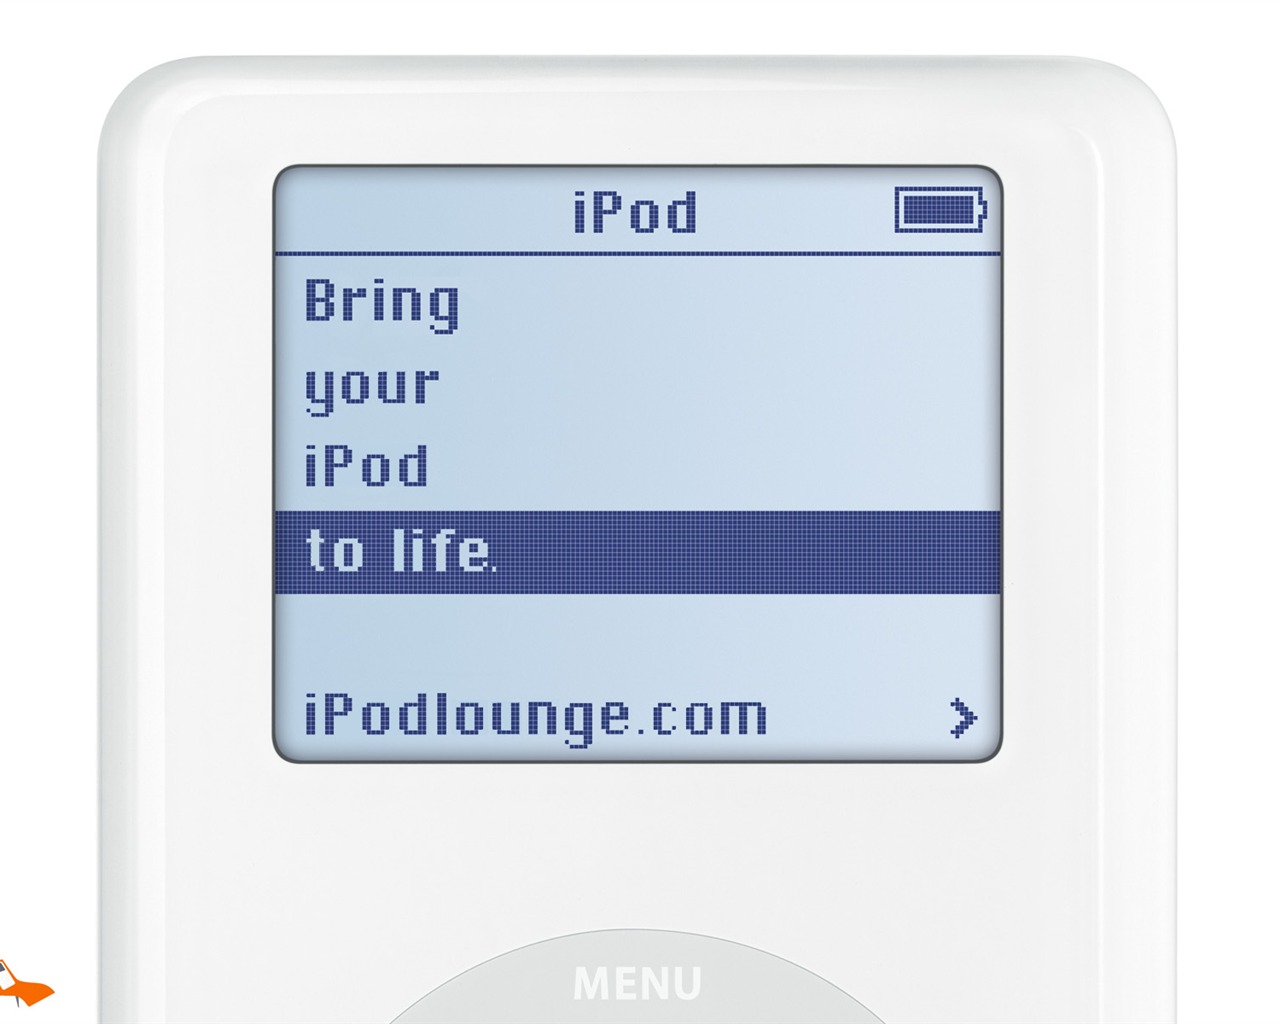 iPod 壁紙(一) #8 - 1280x1024